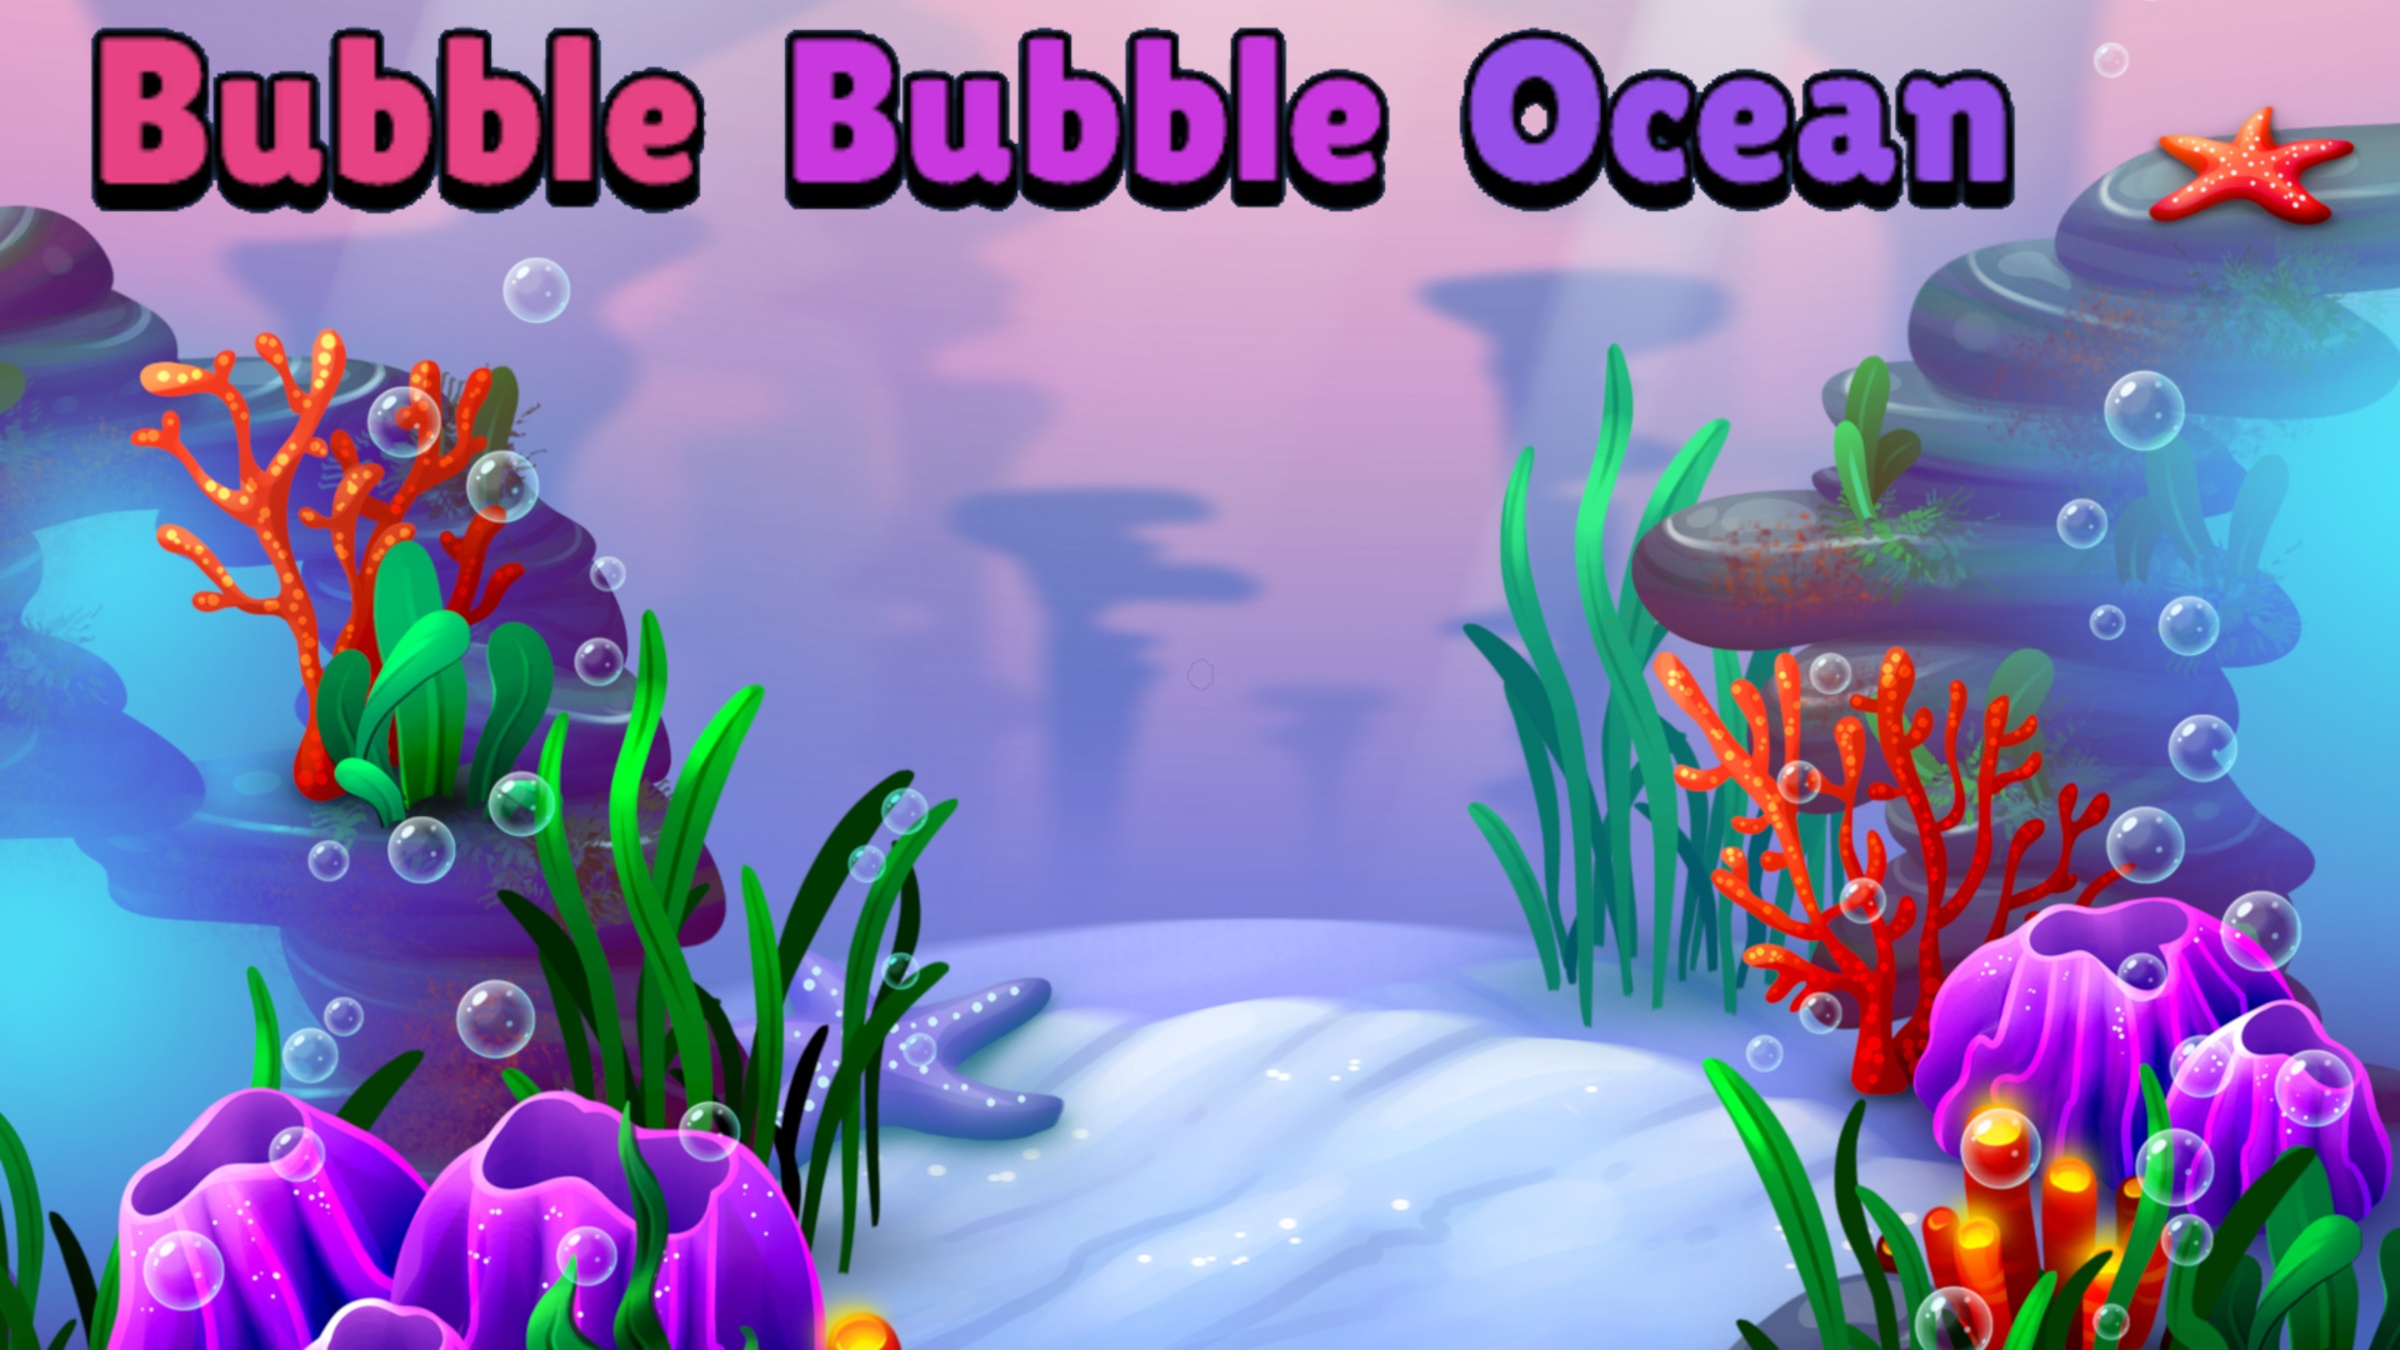 Bubble Bubble Ocean for Nintendo Switch